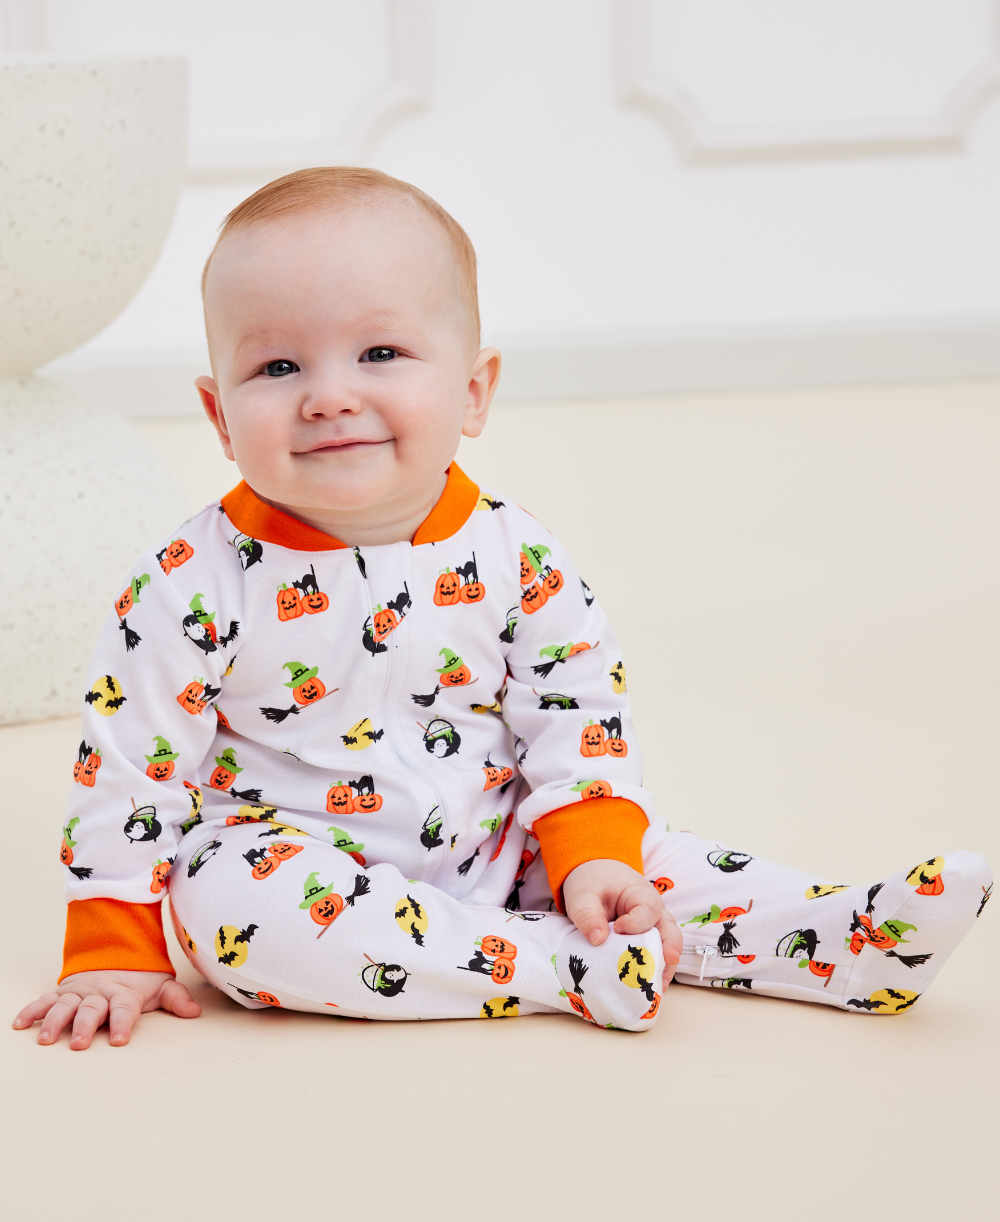 Shop Unisex Baby Pajamas & Sleepwear